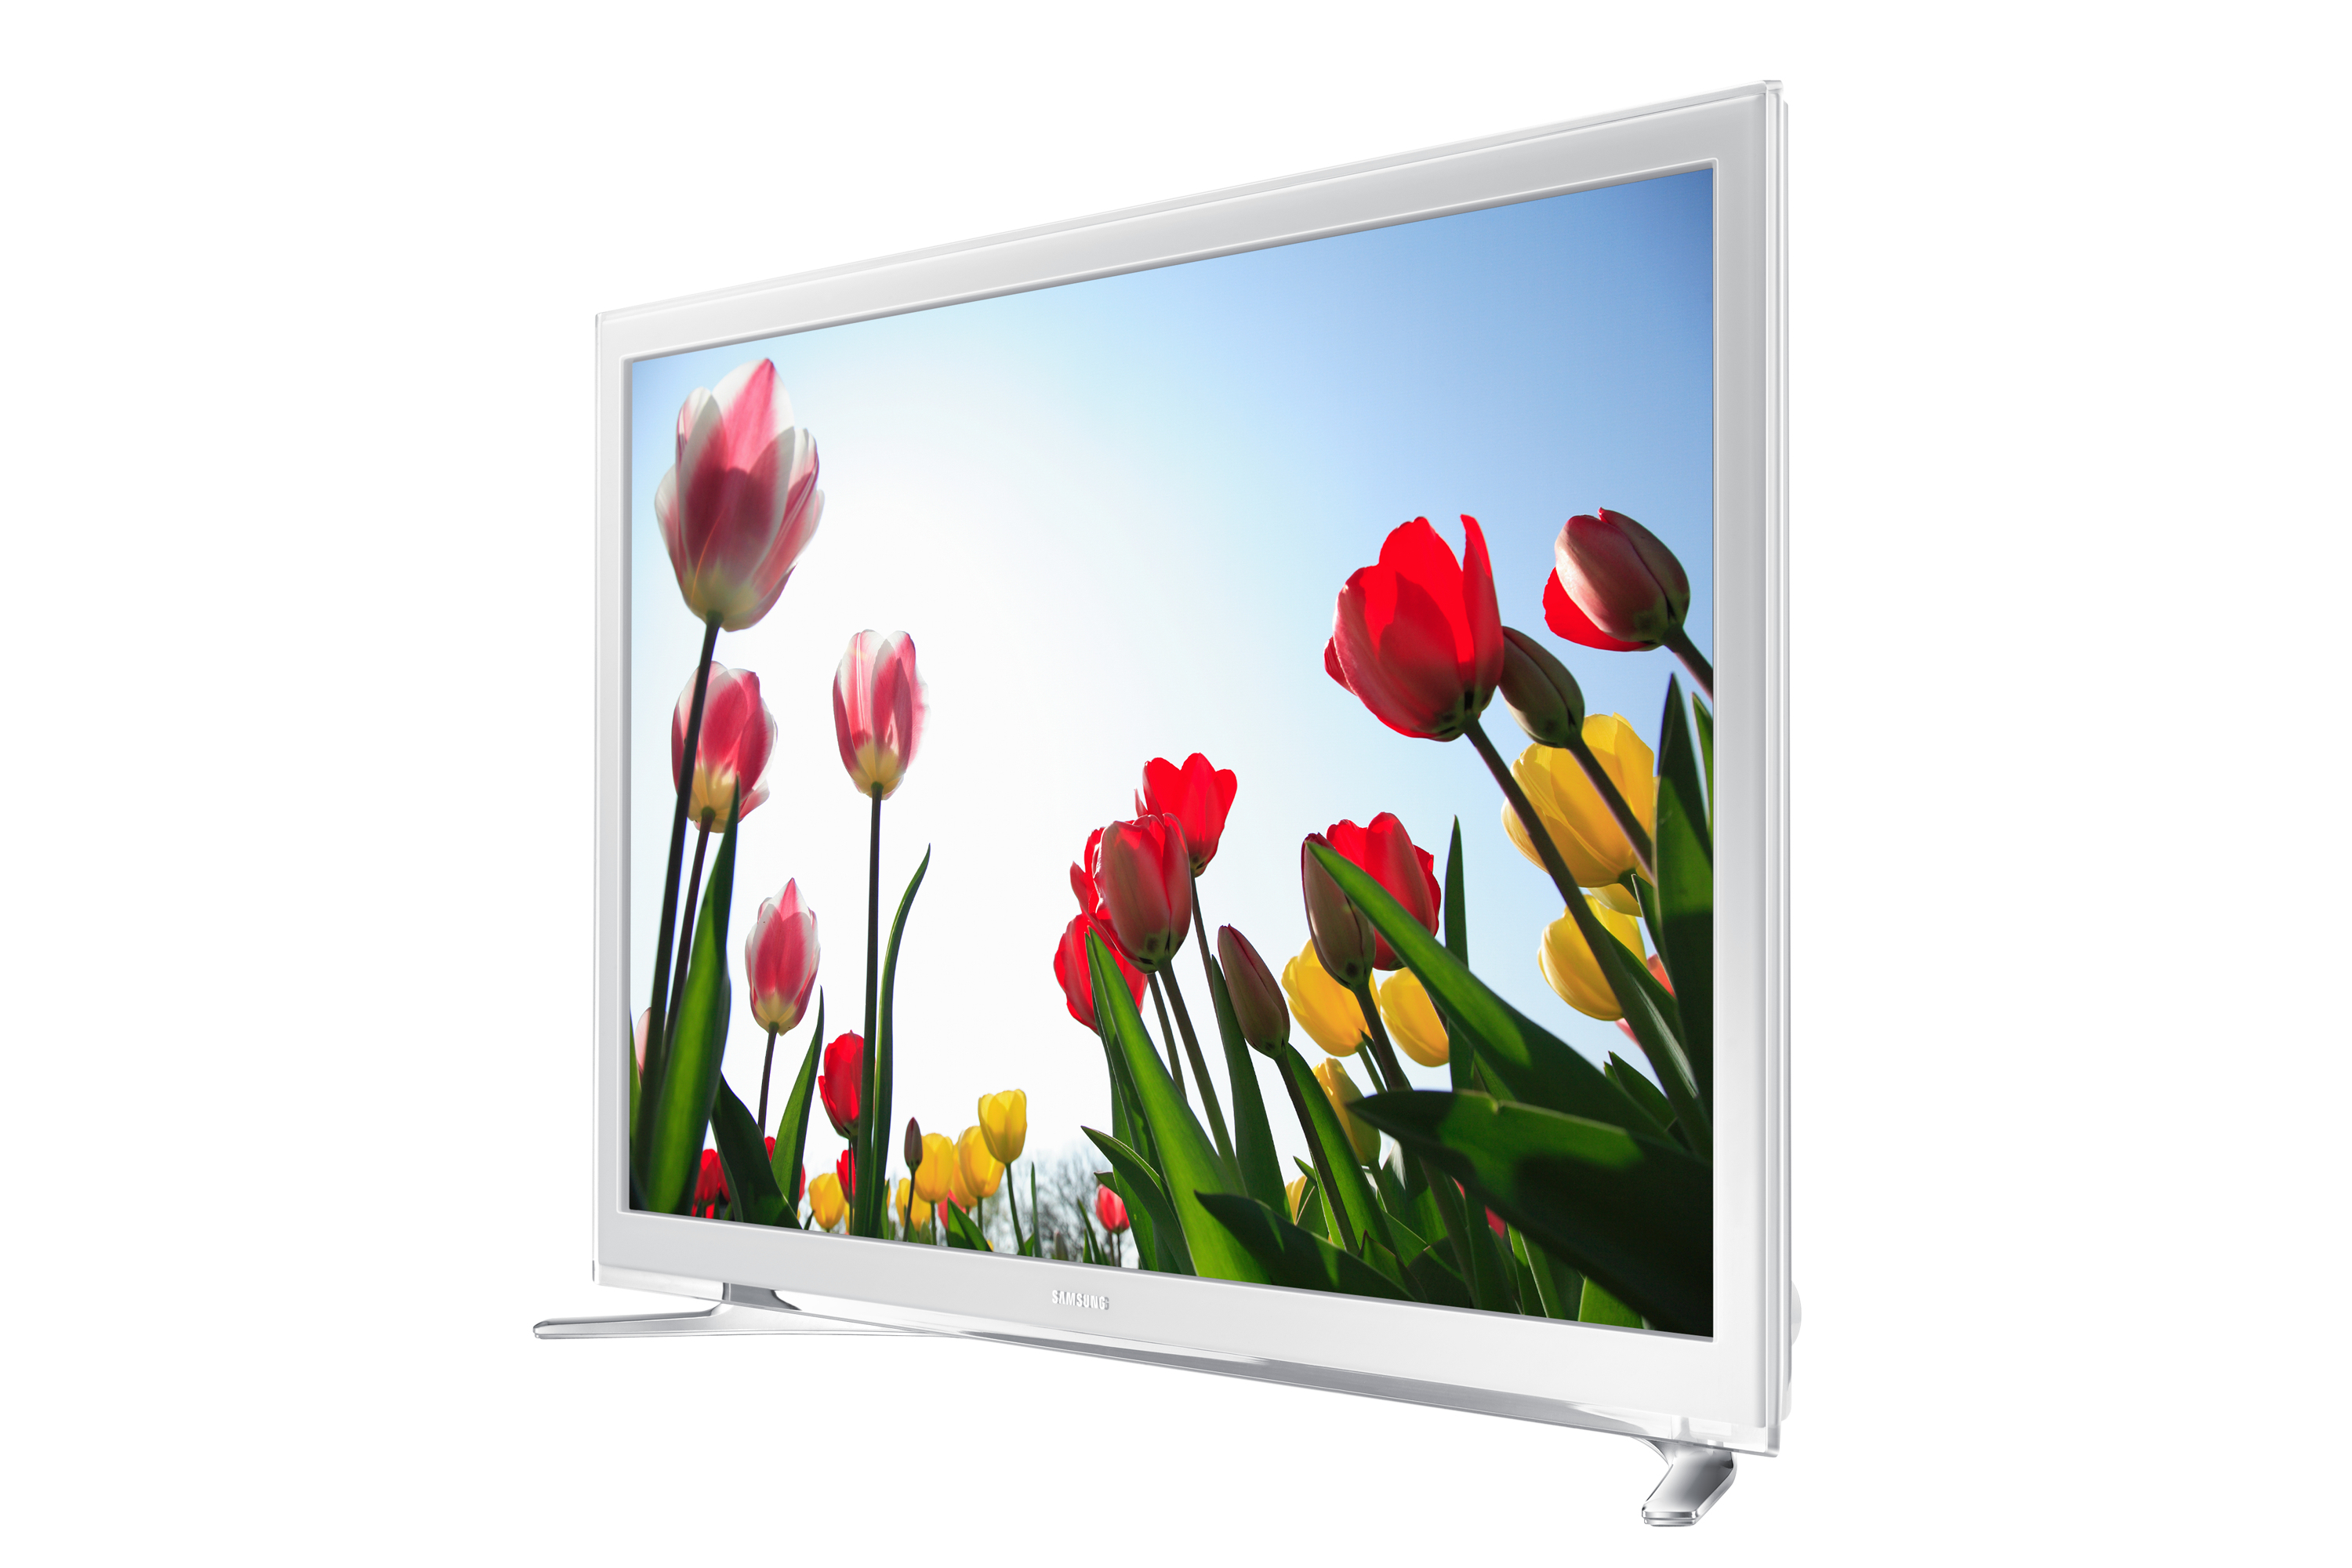 Недорогие 32 телевизоры в спб. Samsung ue32h4510. Samsung Smart TV 32 дюйма белый. Samsung ue22f5410. 22h5610samsung.